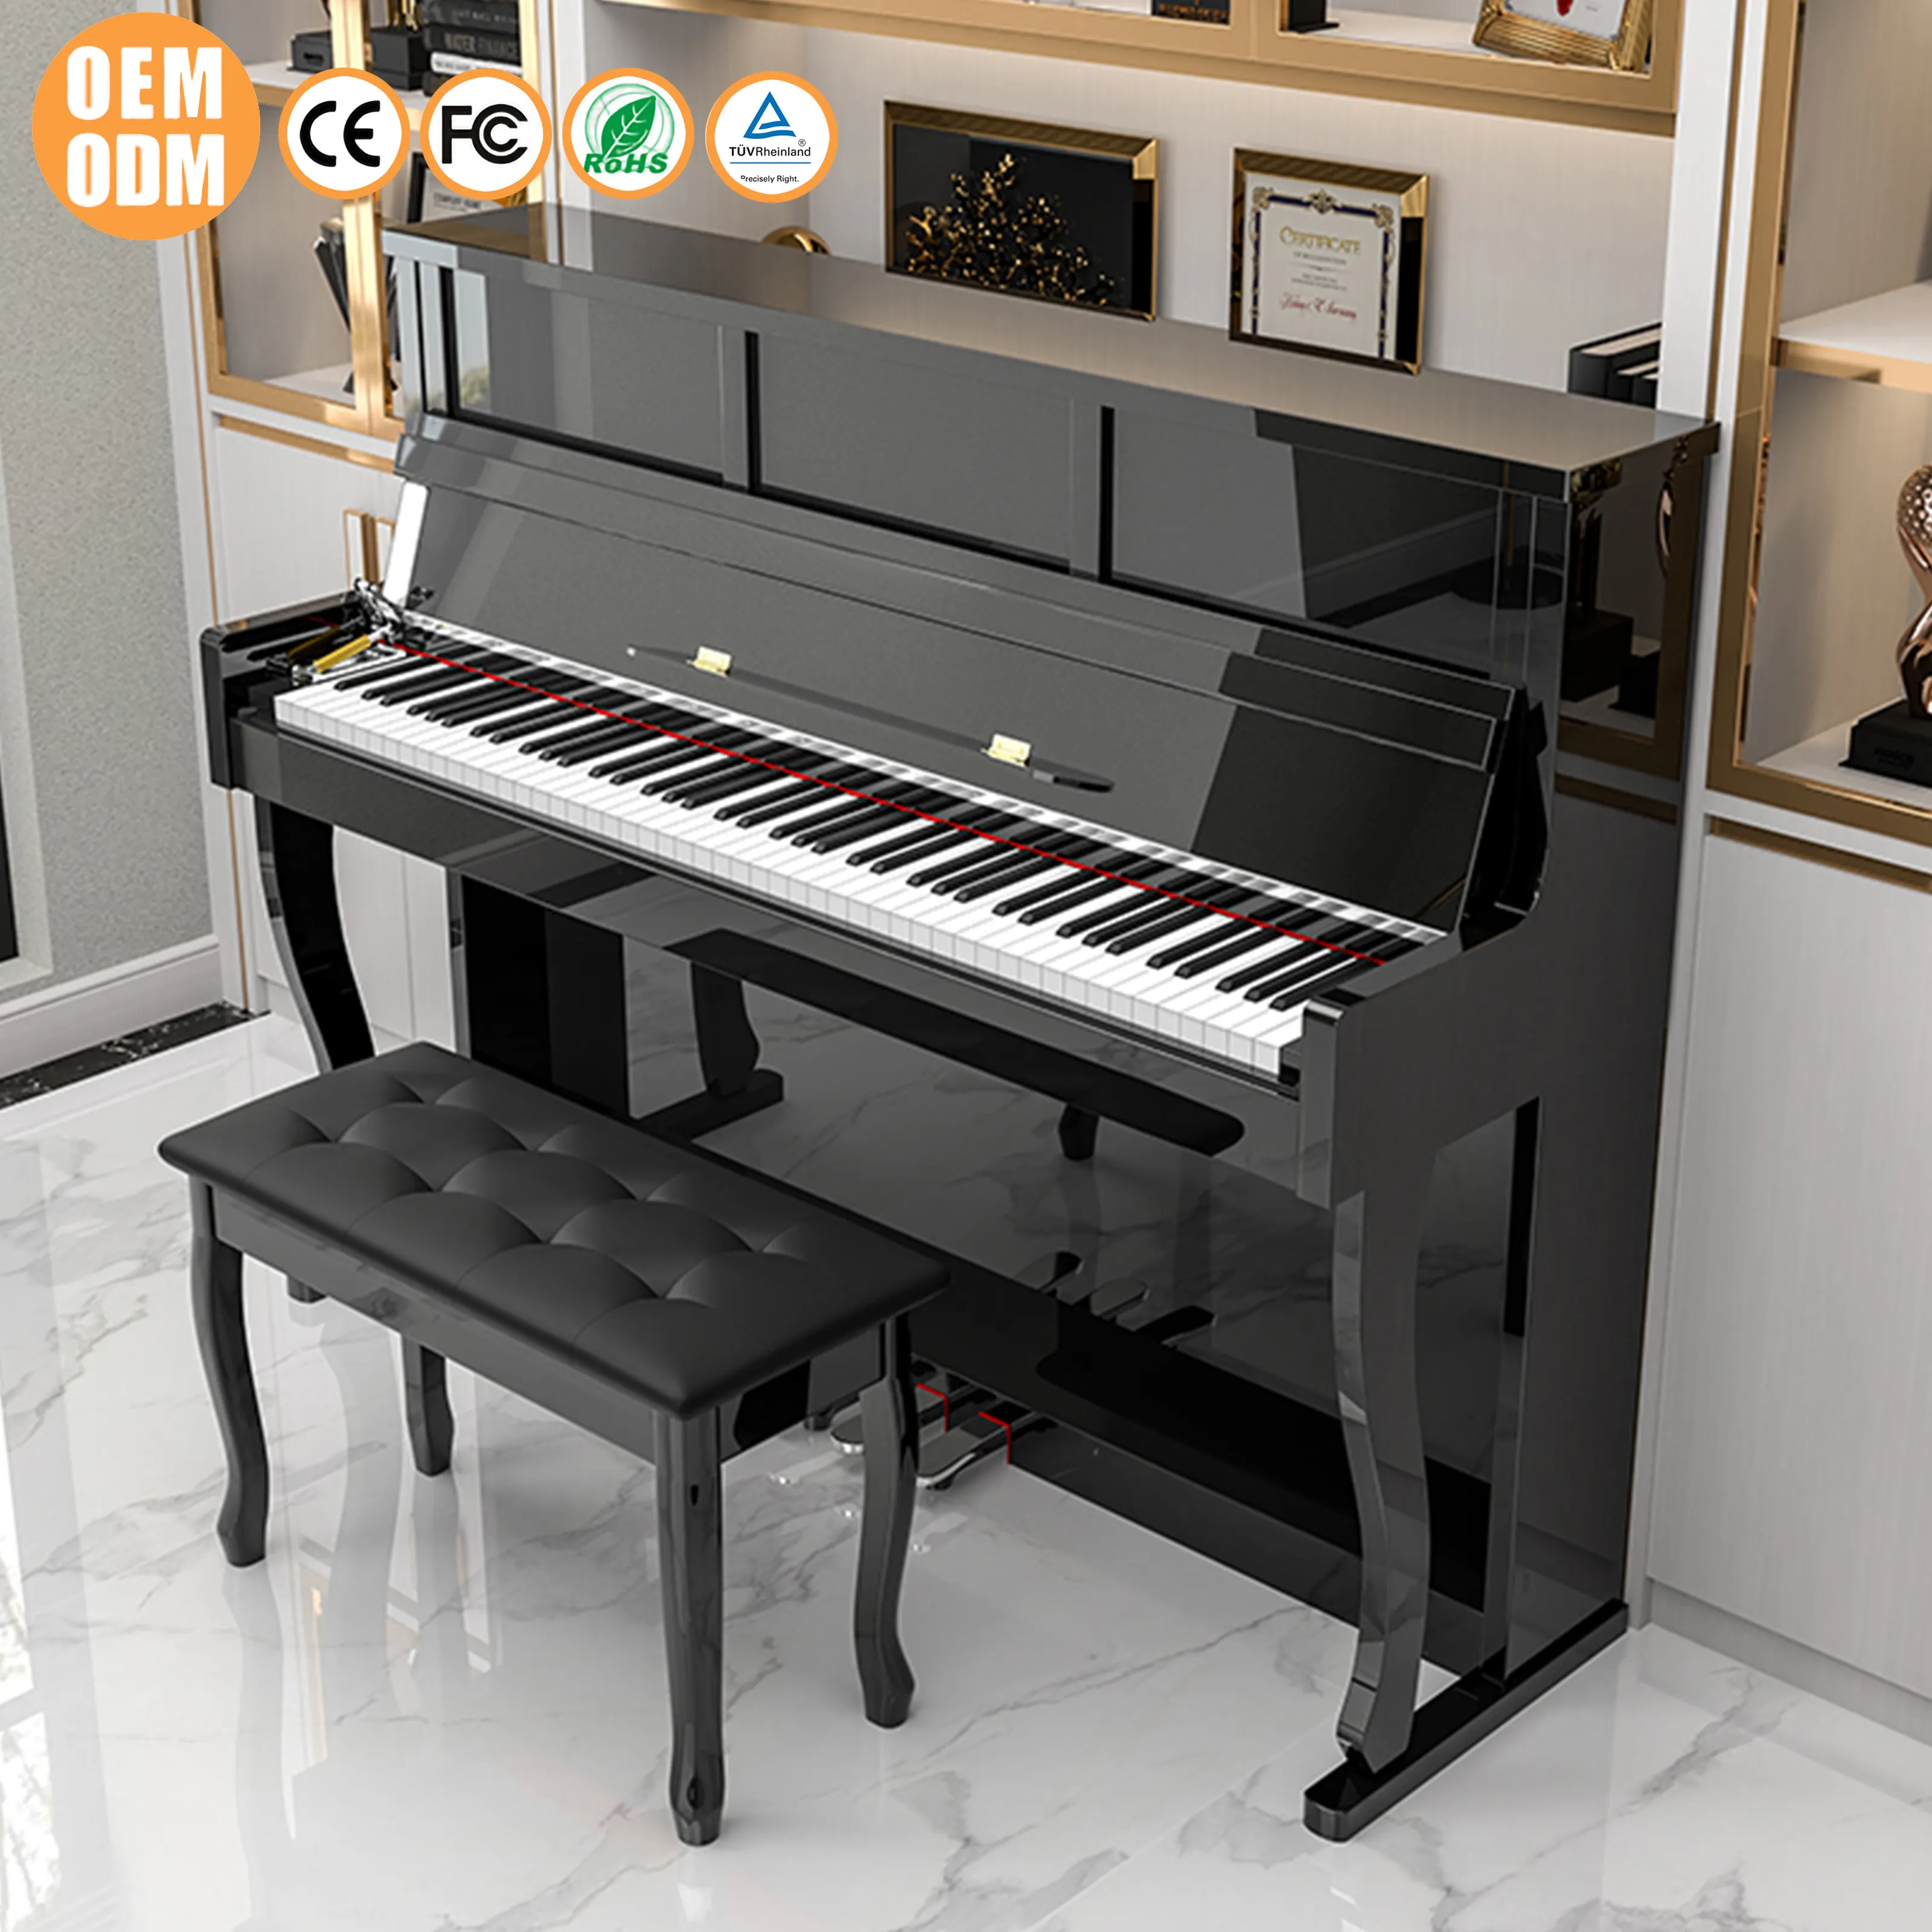 LeGemCharr Keyboard Piano Digital 88 nada, instrumen musik Piano tegak China